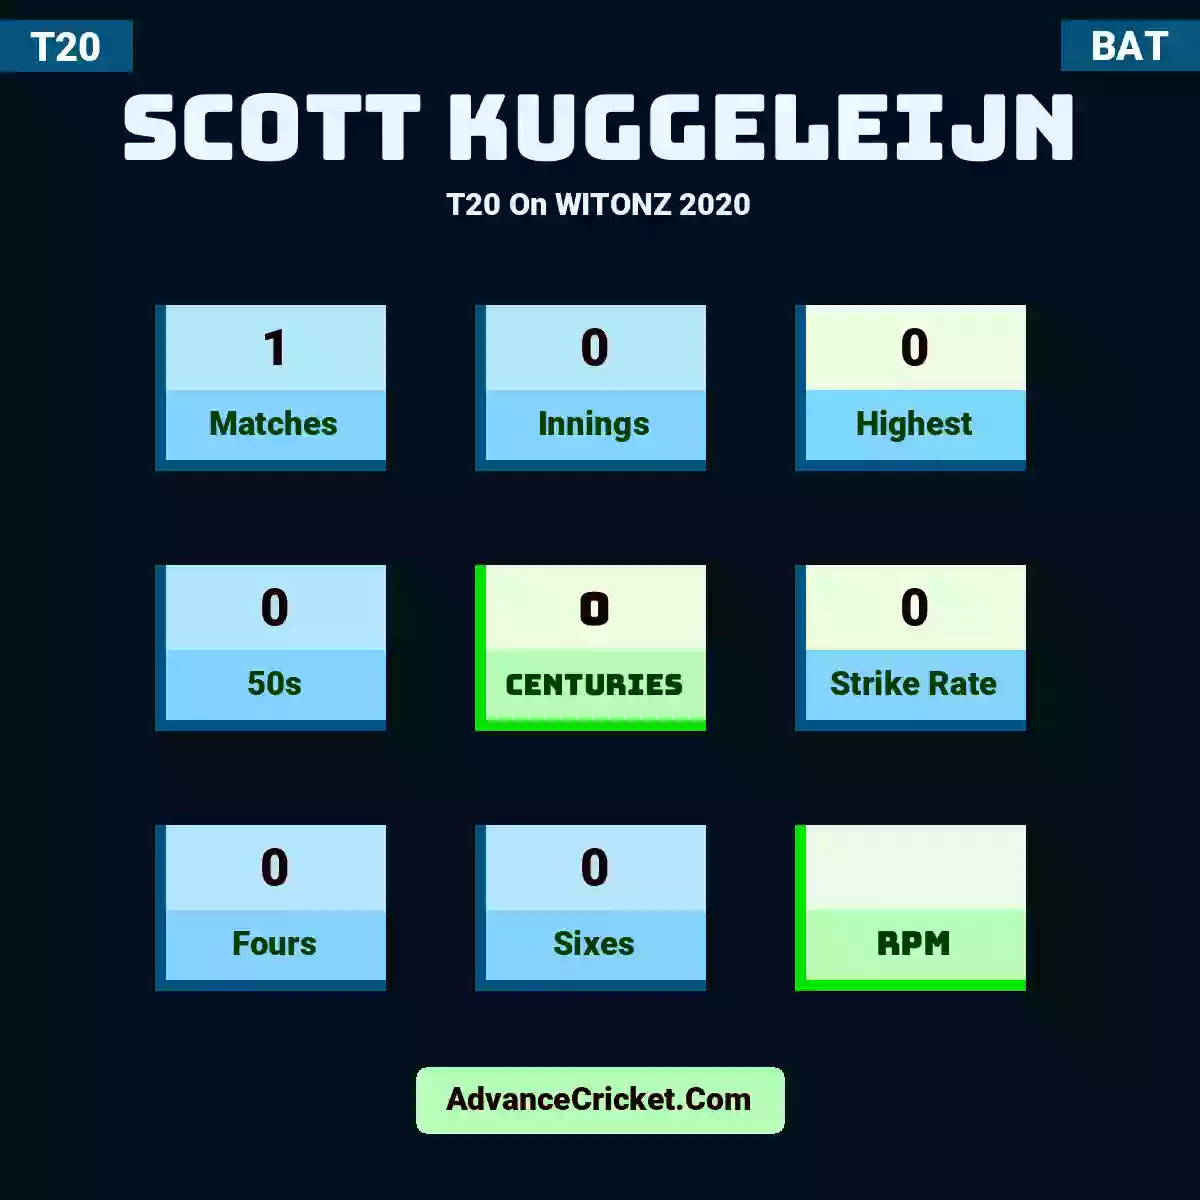 Scott Kuggeleijn T20  On WITONZ 2020, Scott Kuggeleijn played 1 matches, scored 0 runs as highest, 0 half-centuries, and 0 centuries, with a strike rate of 0. S.Kuggeleijn hit 0 fours and 0 sixes.